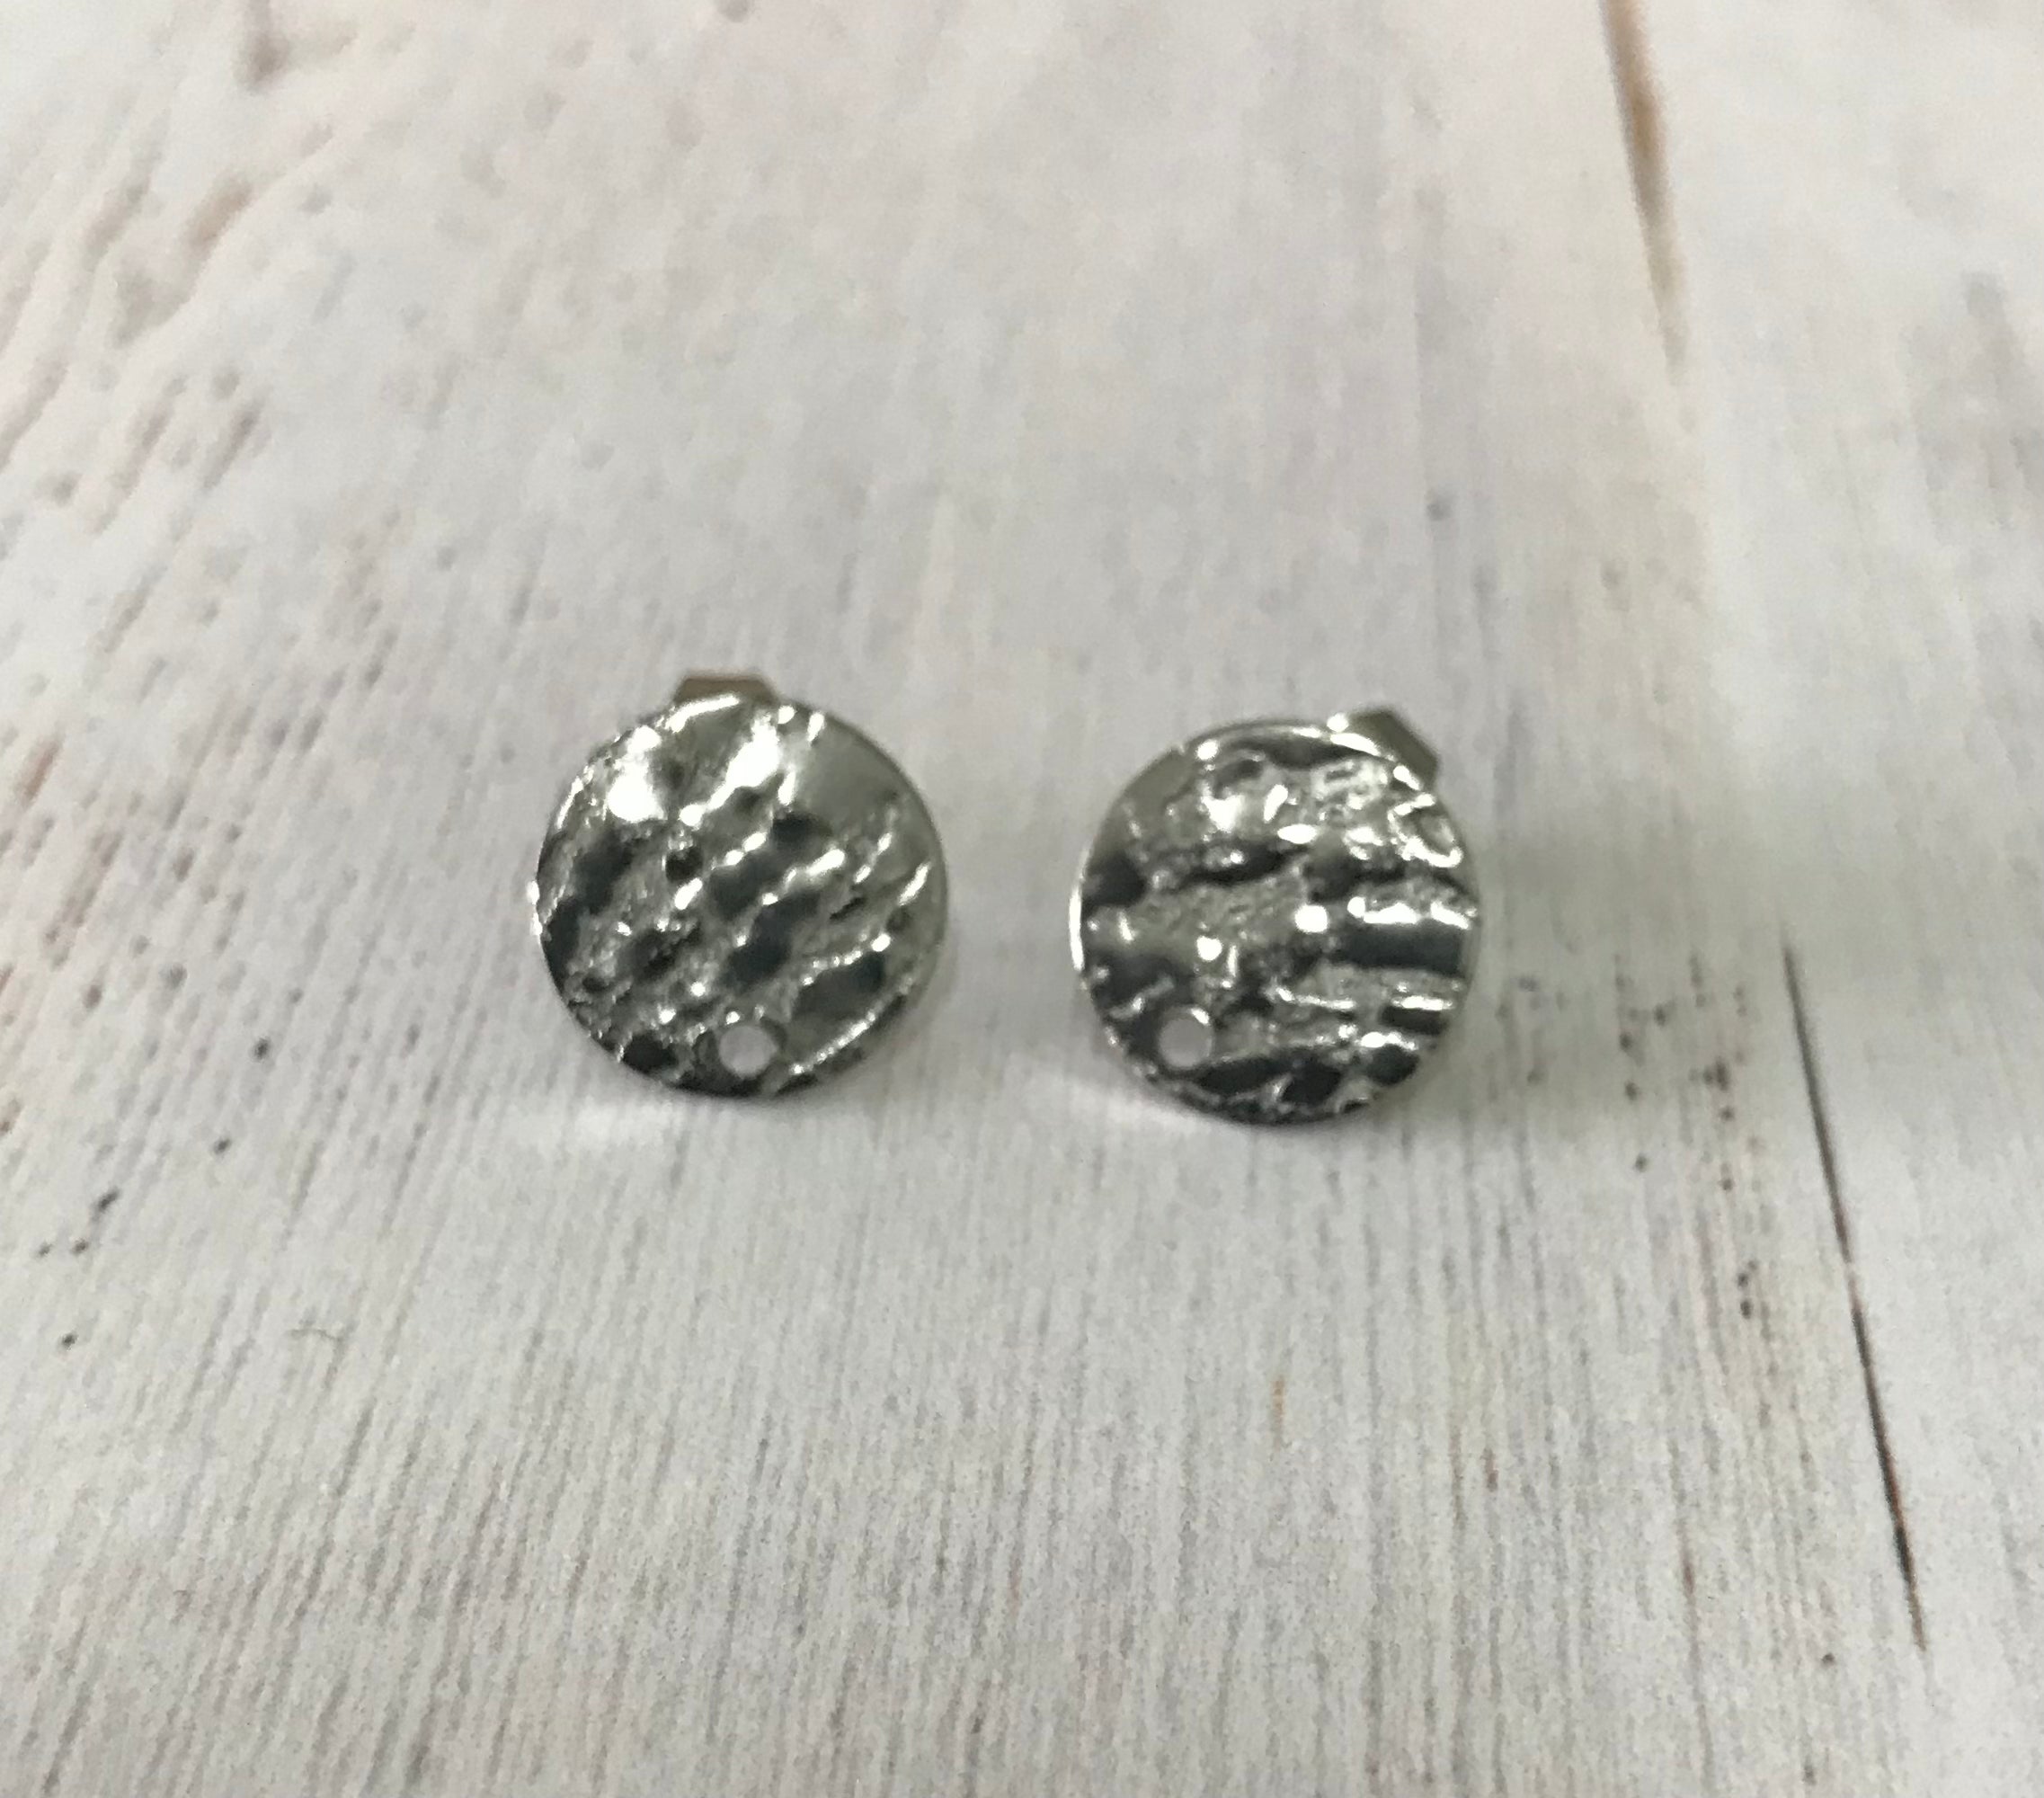 304 Stainless Steel Textured Stud Earrings with Ear Nut (1 Pair)